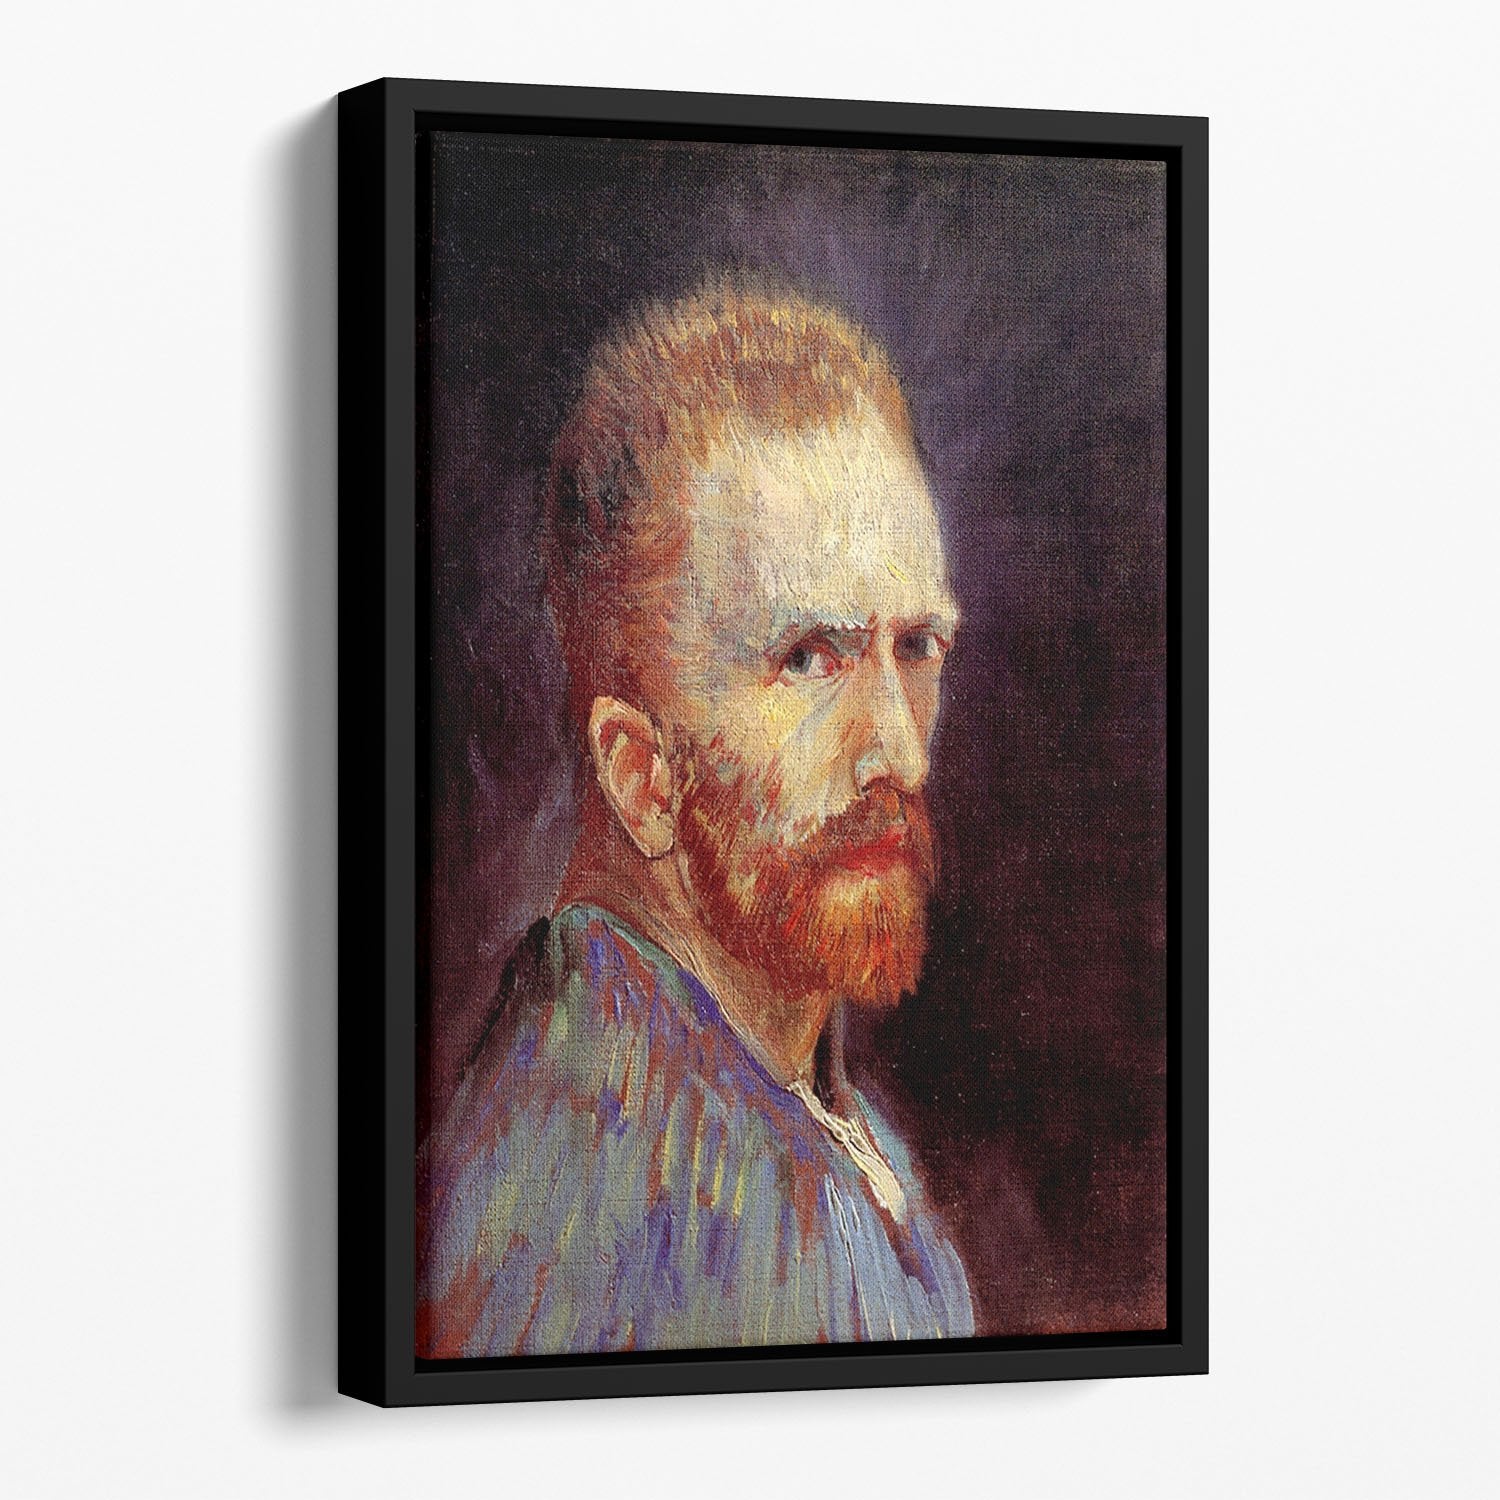 Self-Portrait 9 by Van Gogh Floating Framed Canvas